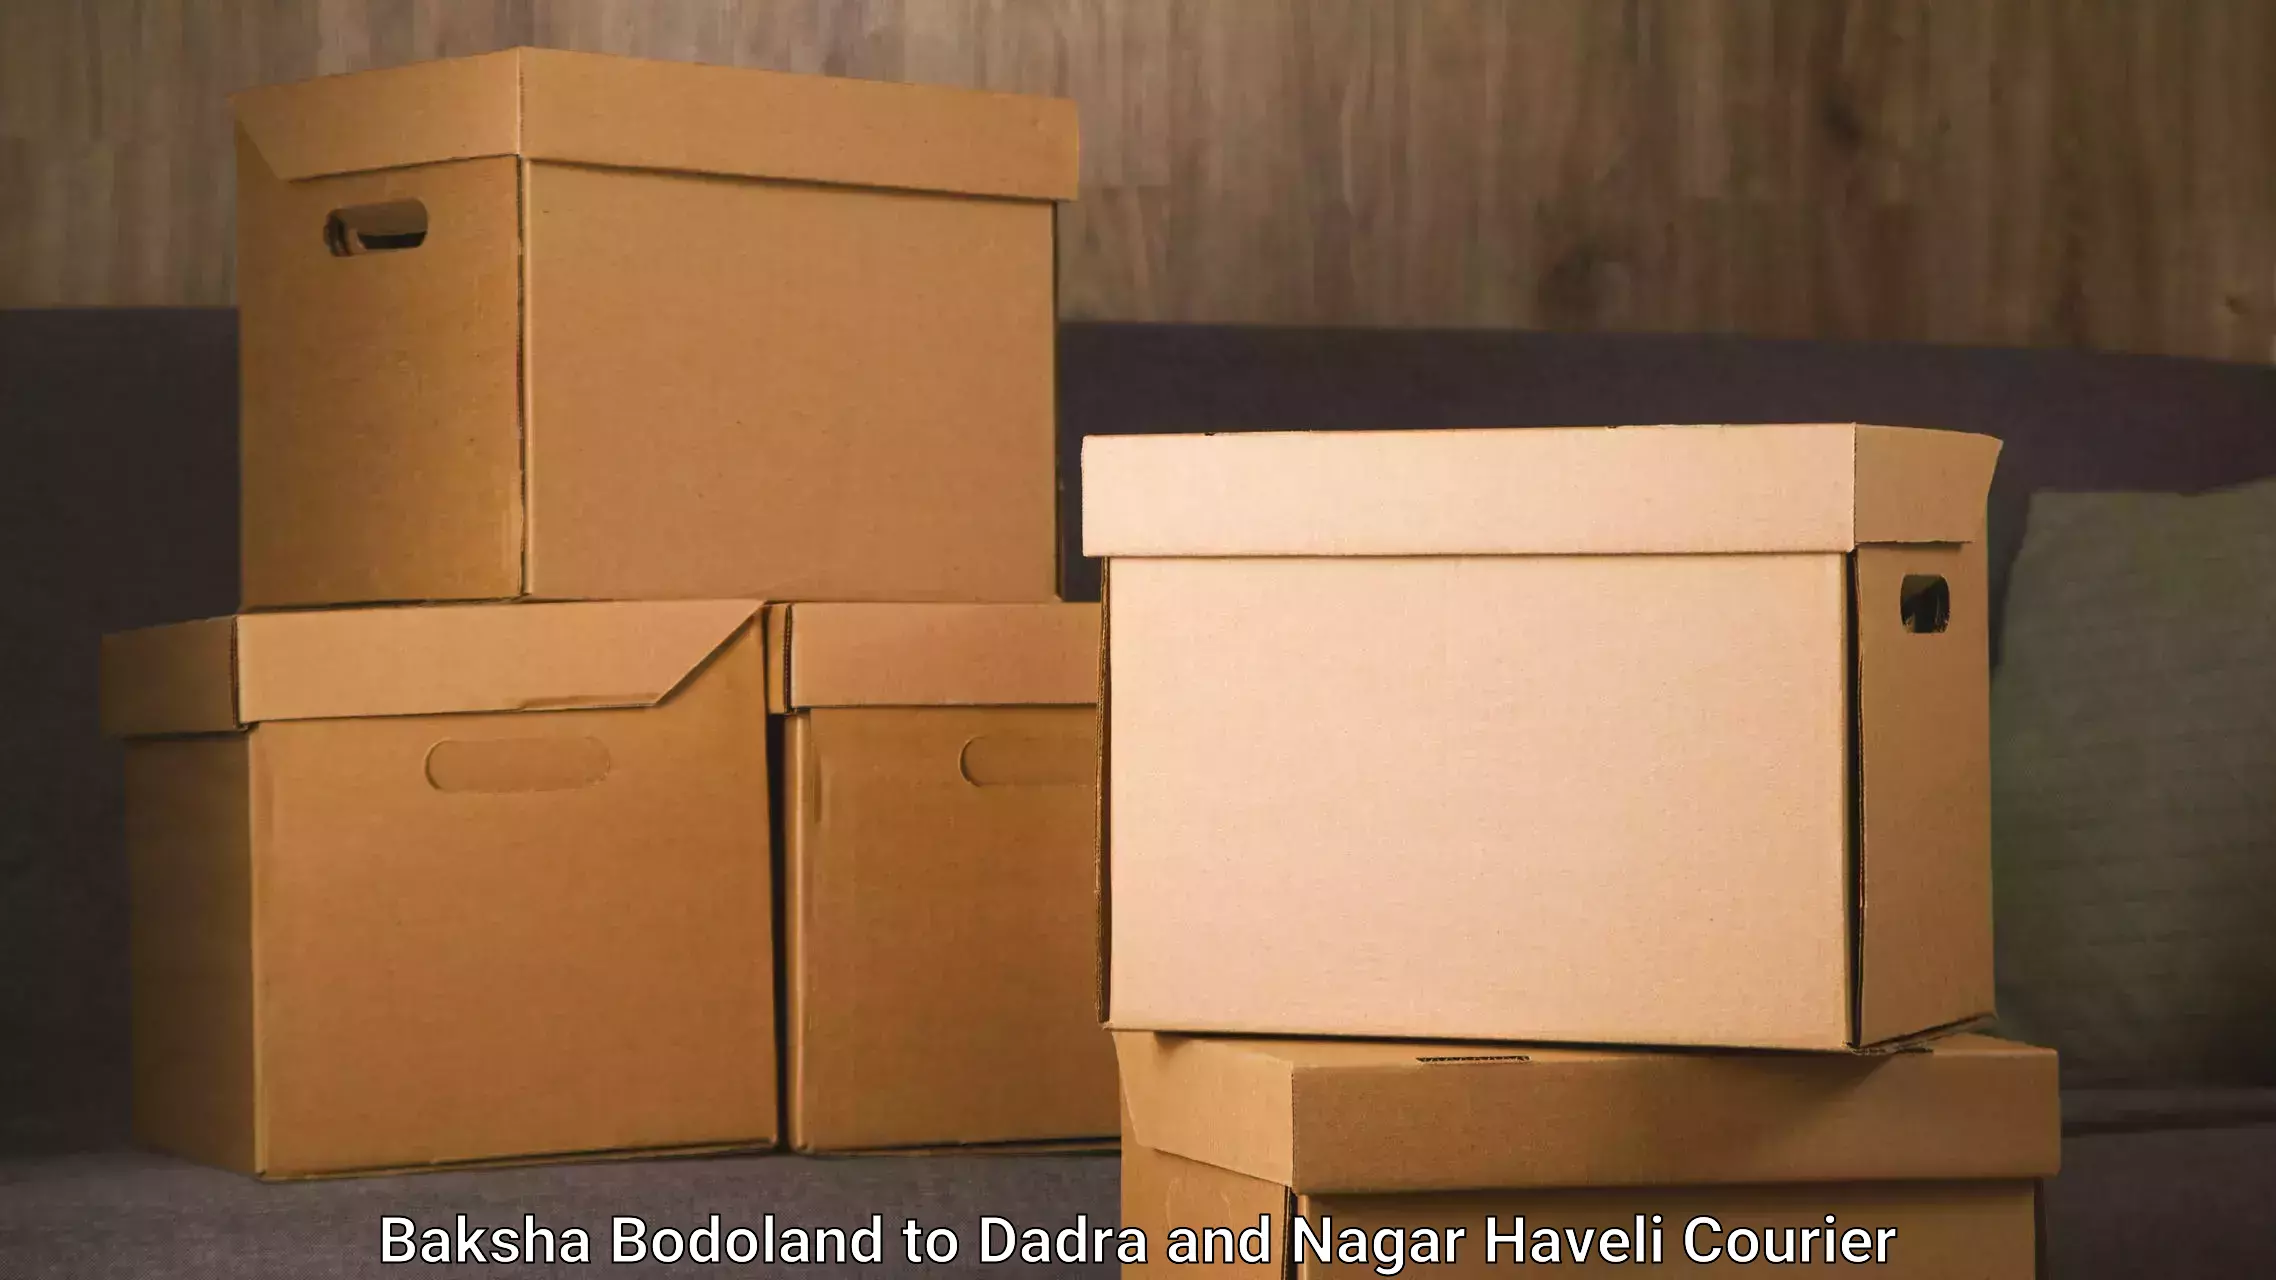 High-performance logistics in Baksha Bodoland to Dadra and Nagar Haveli